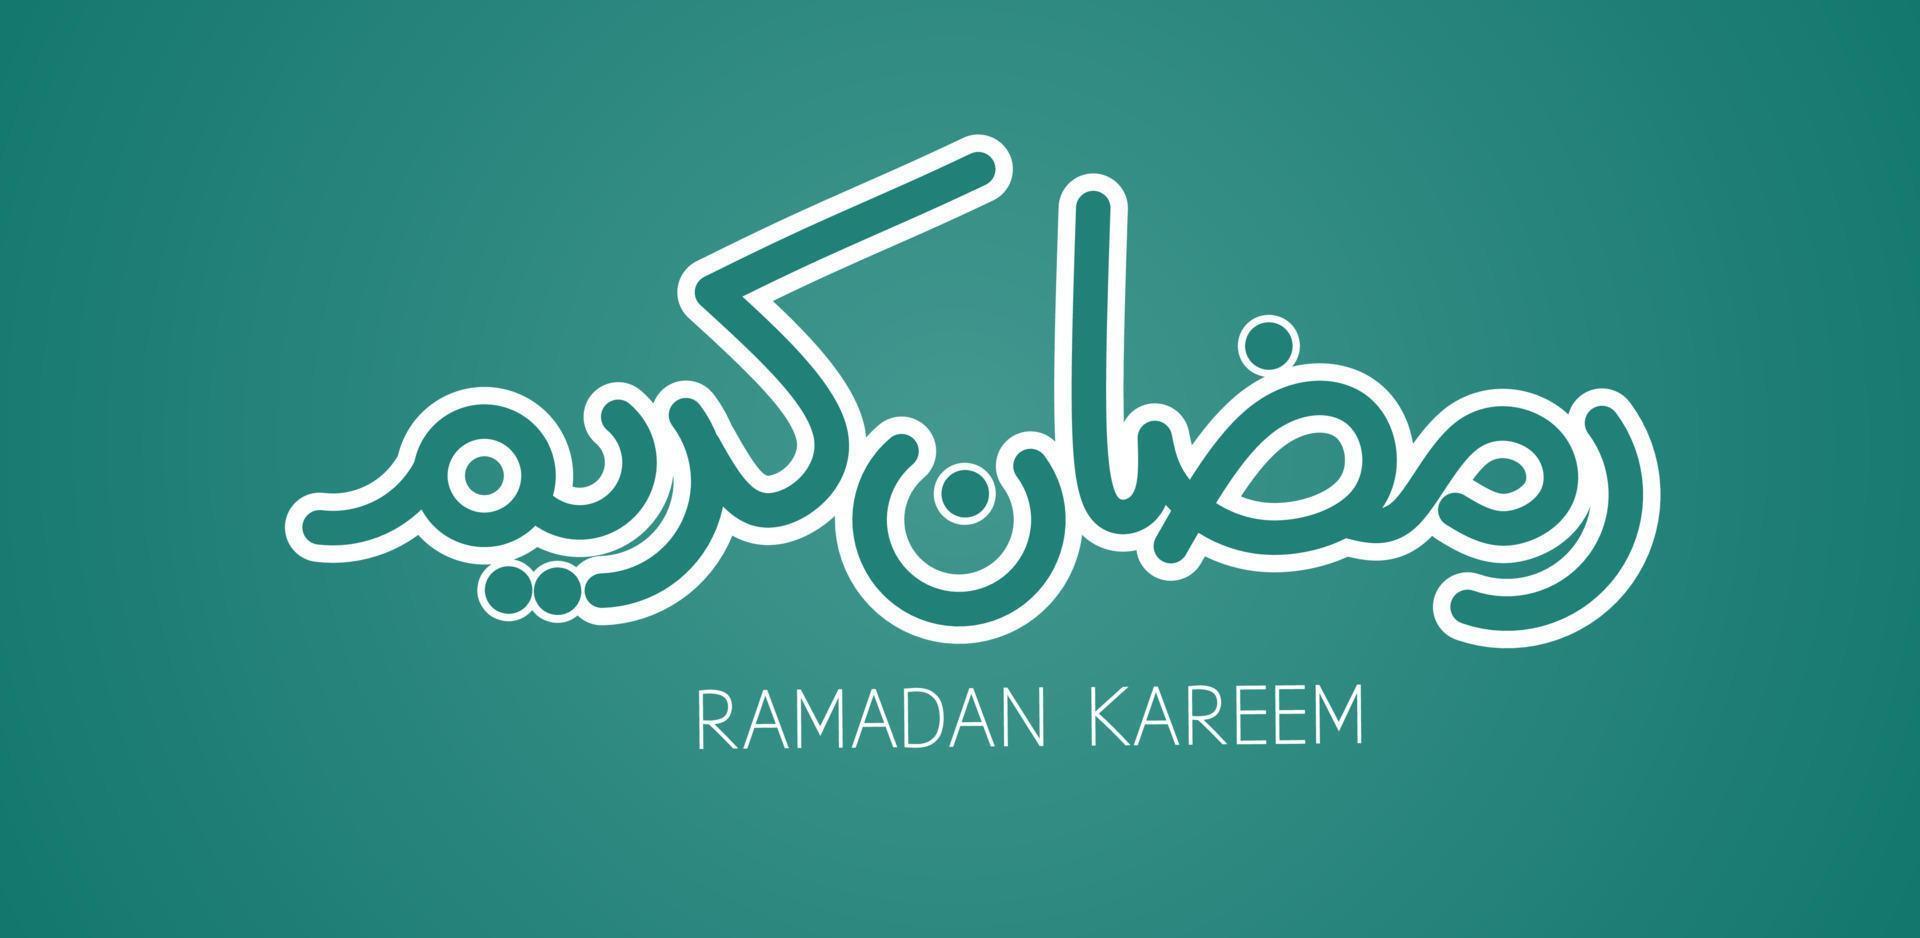 cartão de saudação ramadan kareem. Ramadã Mubarak. vetor